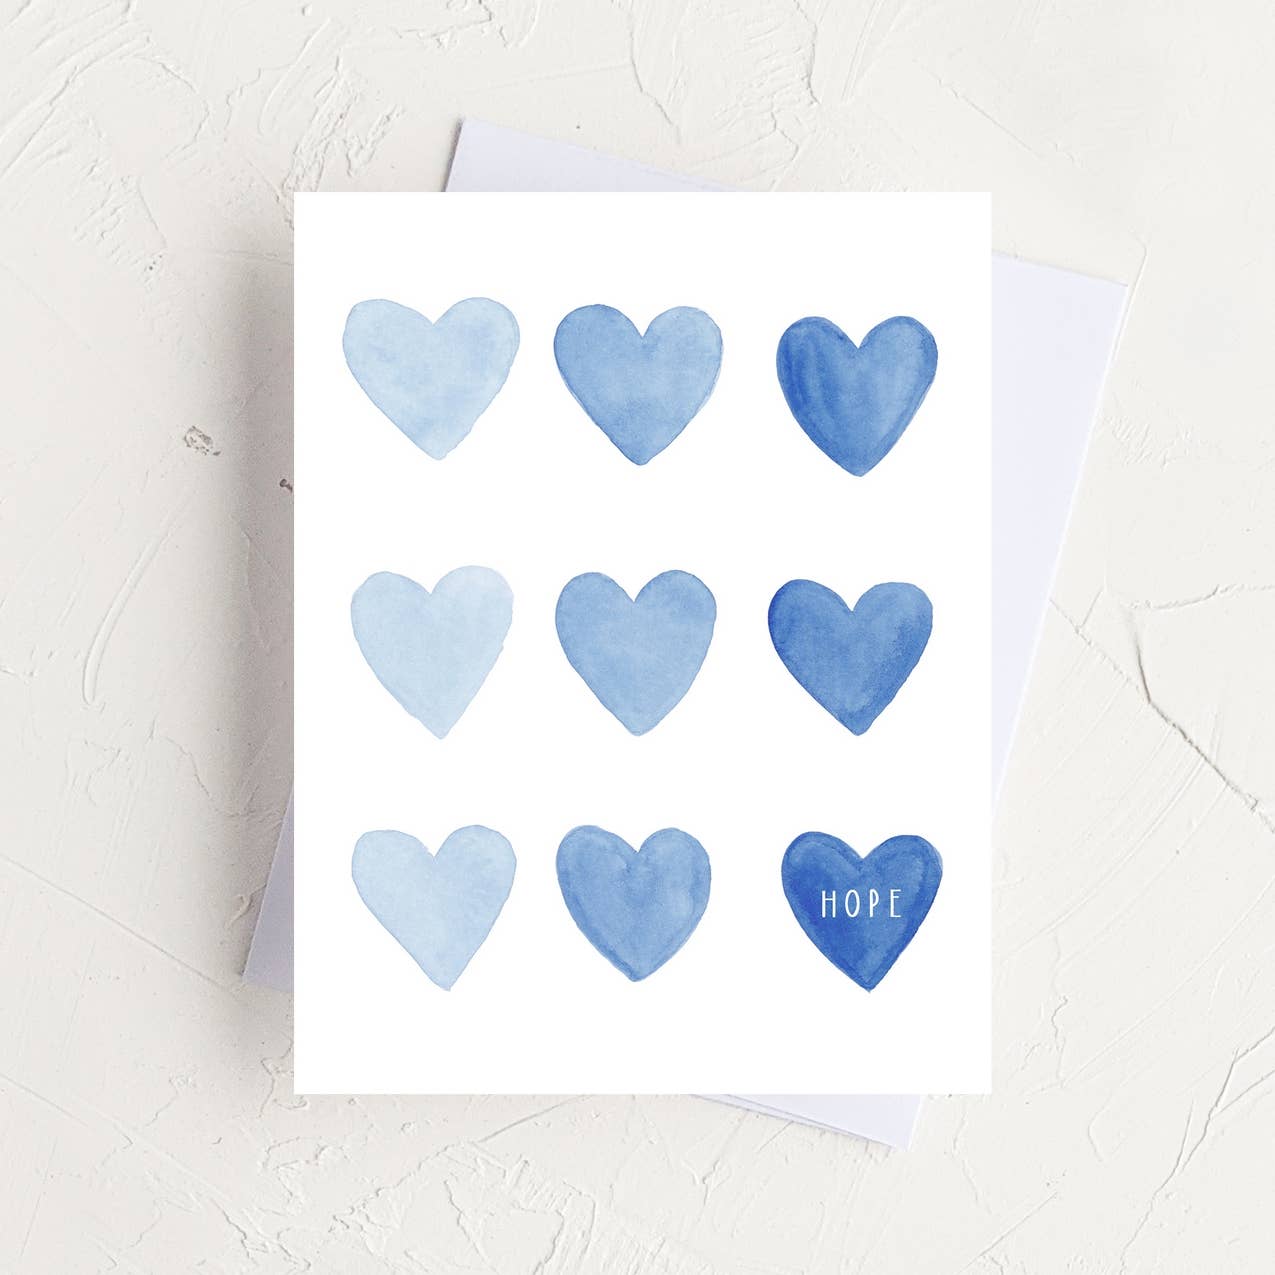 Almeida Illustrations - Hearts of Hope - Blue Encouragement & Sympathy Greeting Card